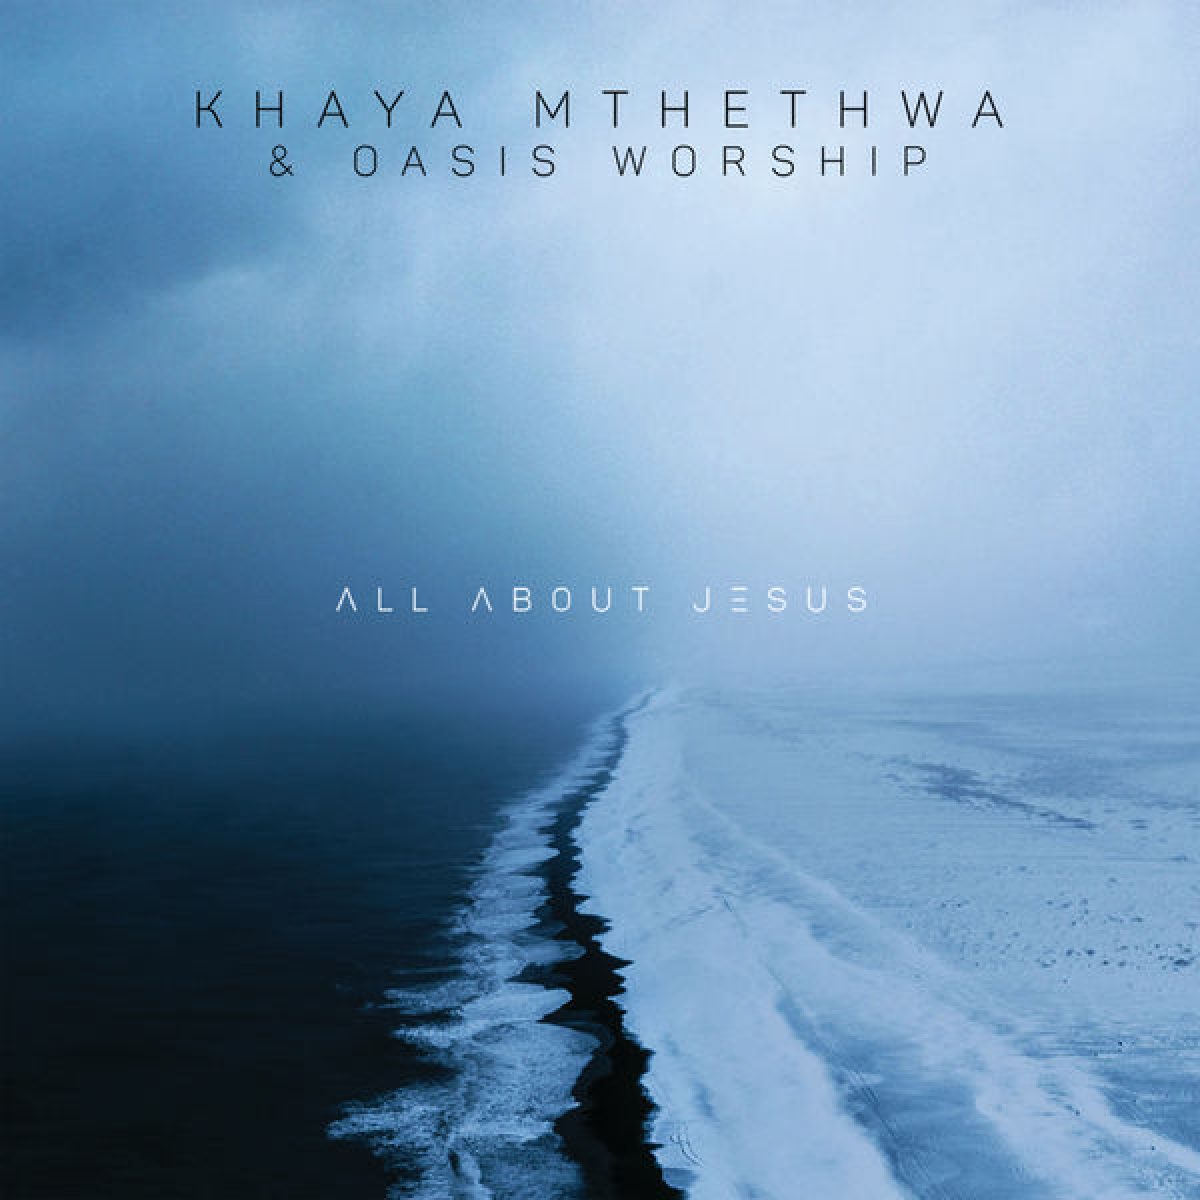 All About Jesus ( Oasis Worship) by Khaya Mthethwa | Album